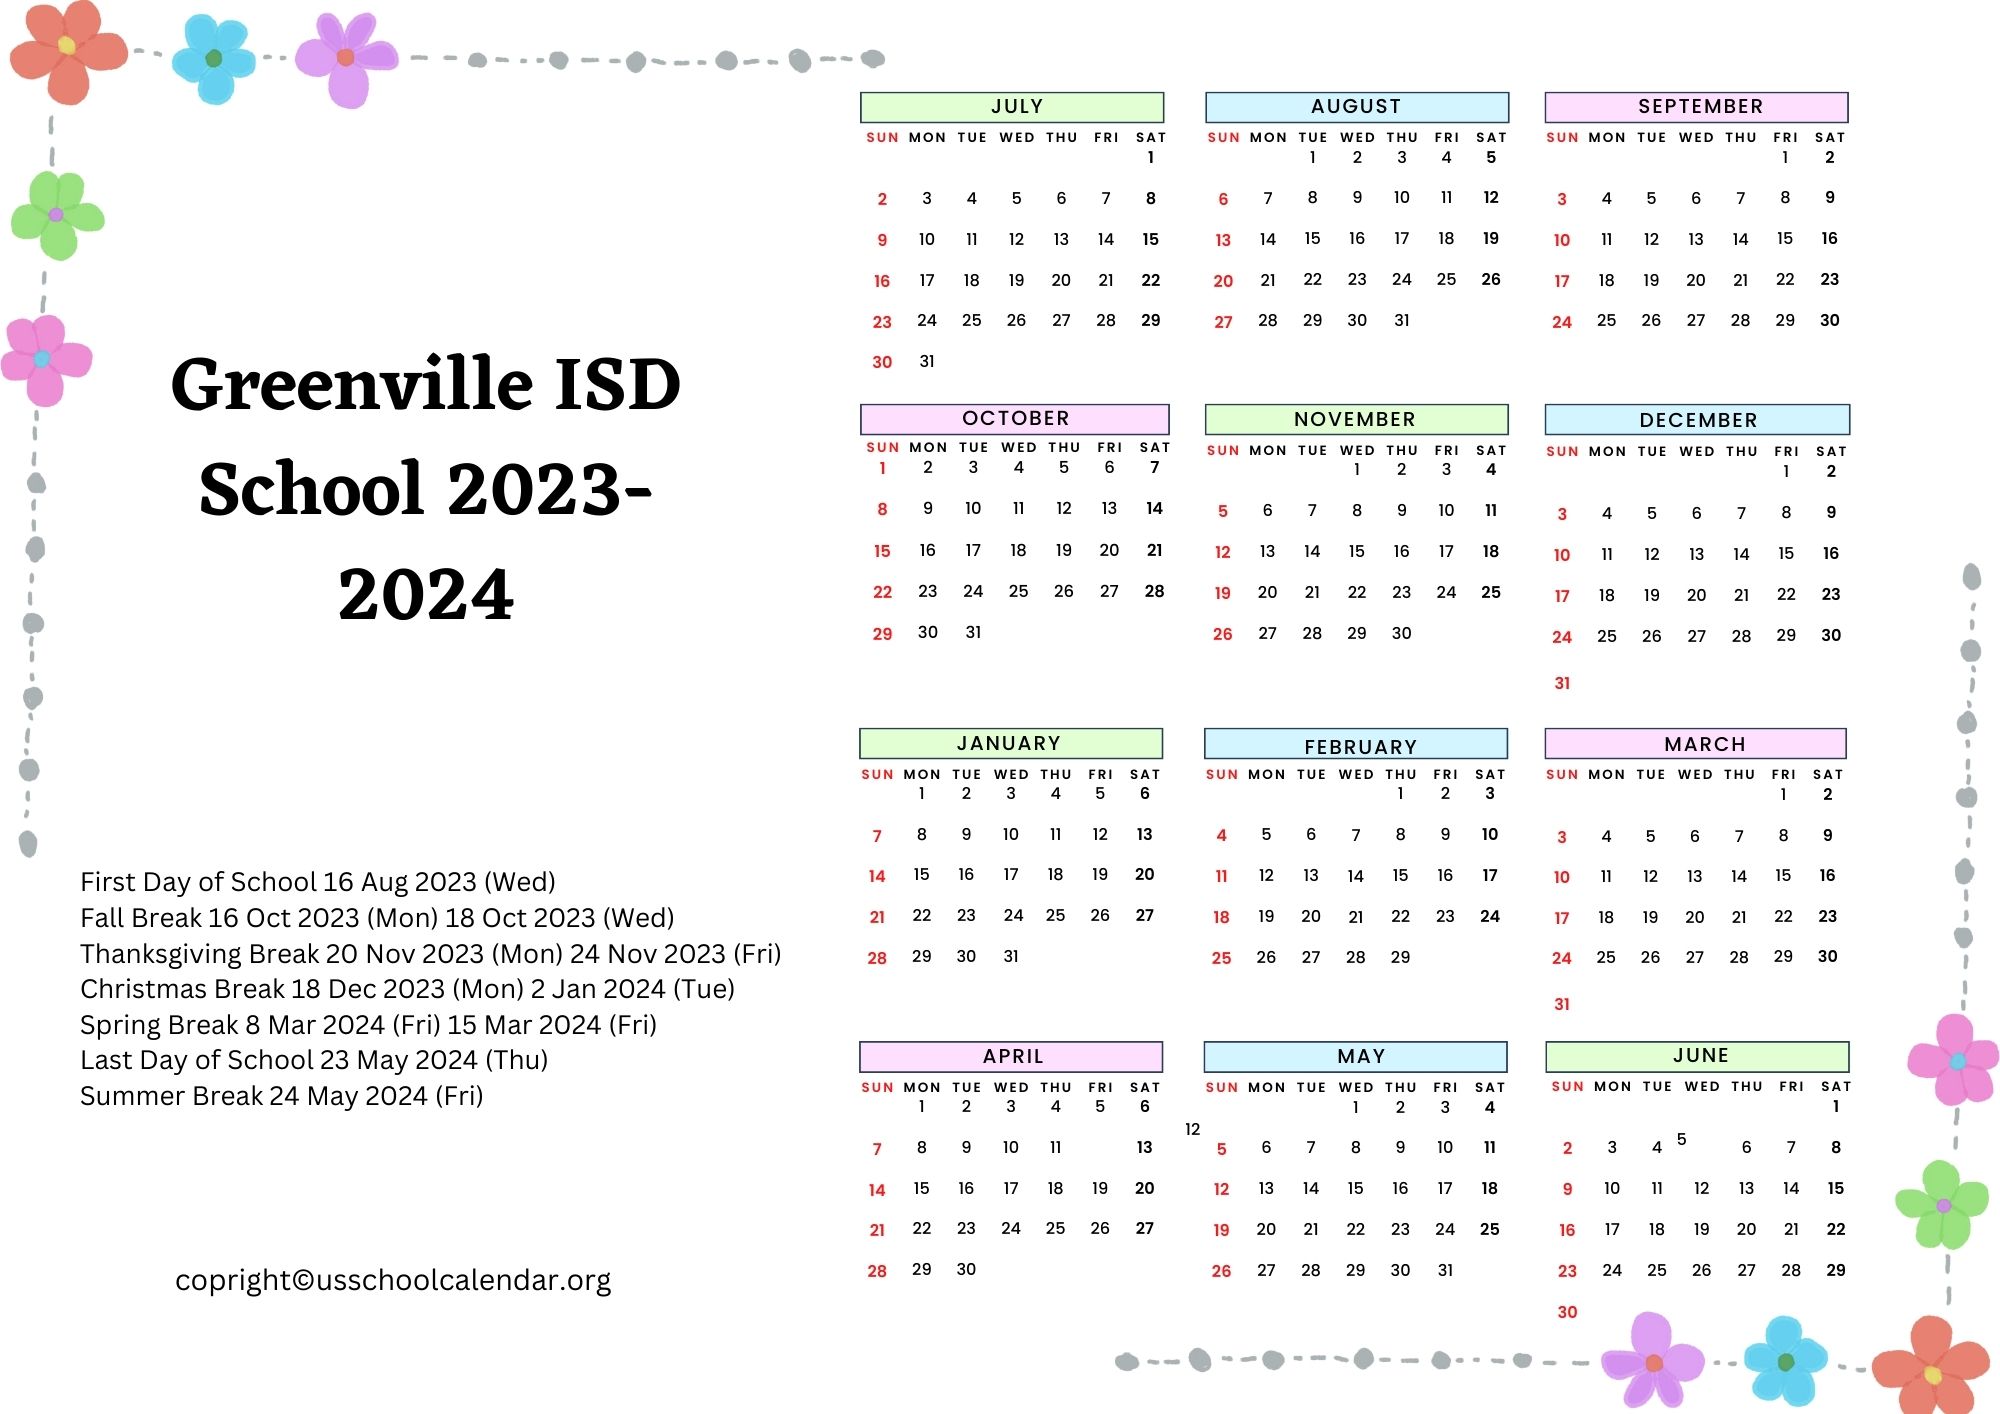 greenville-isd-school-calendar-with-holidays-2023-2024